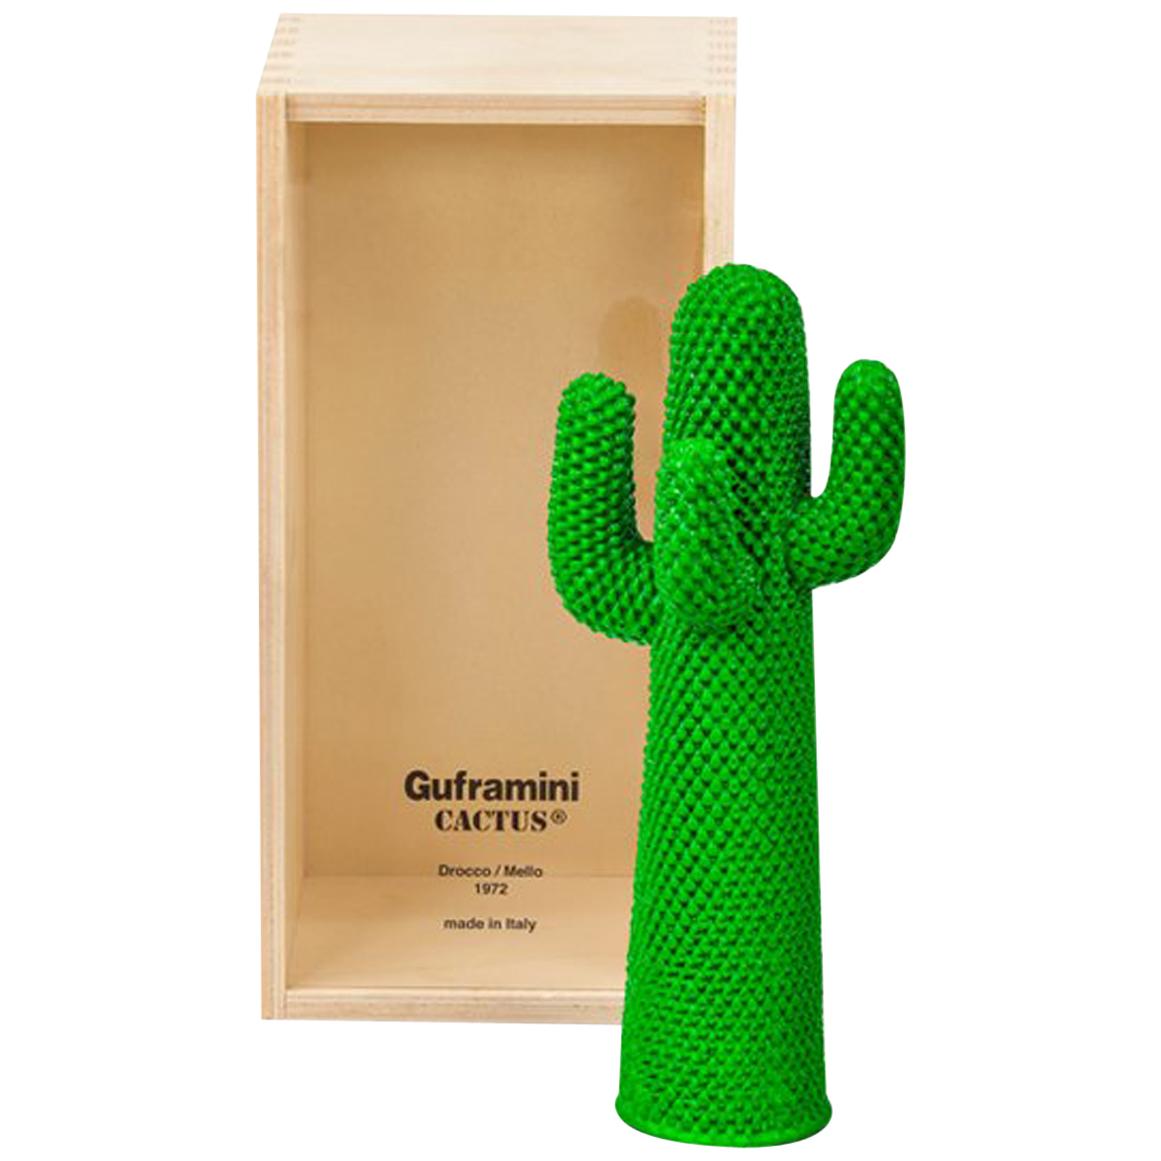 Cactus miniature GUFRAMINI de Drocco & Mello